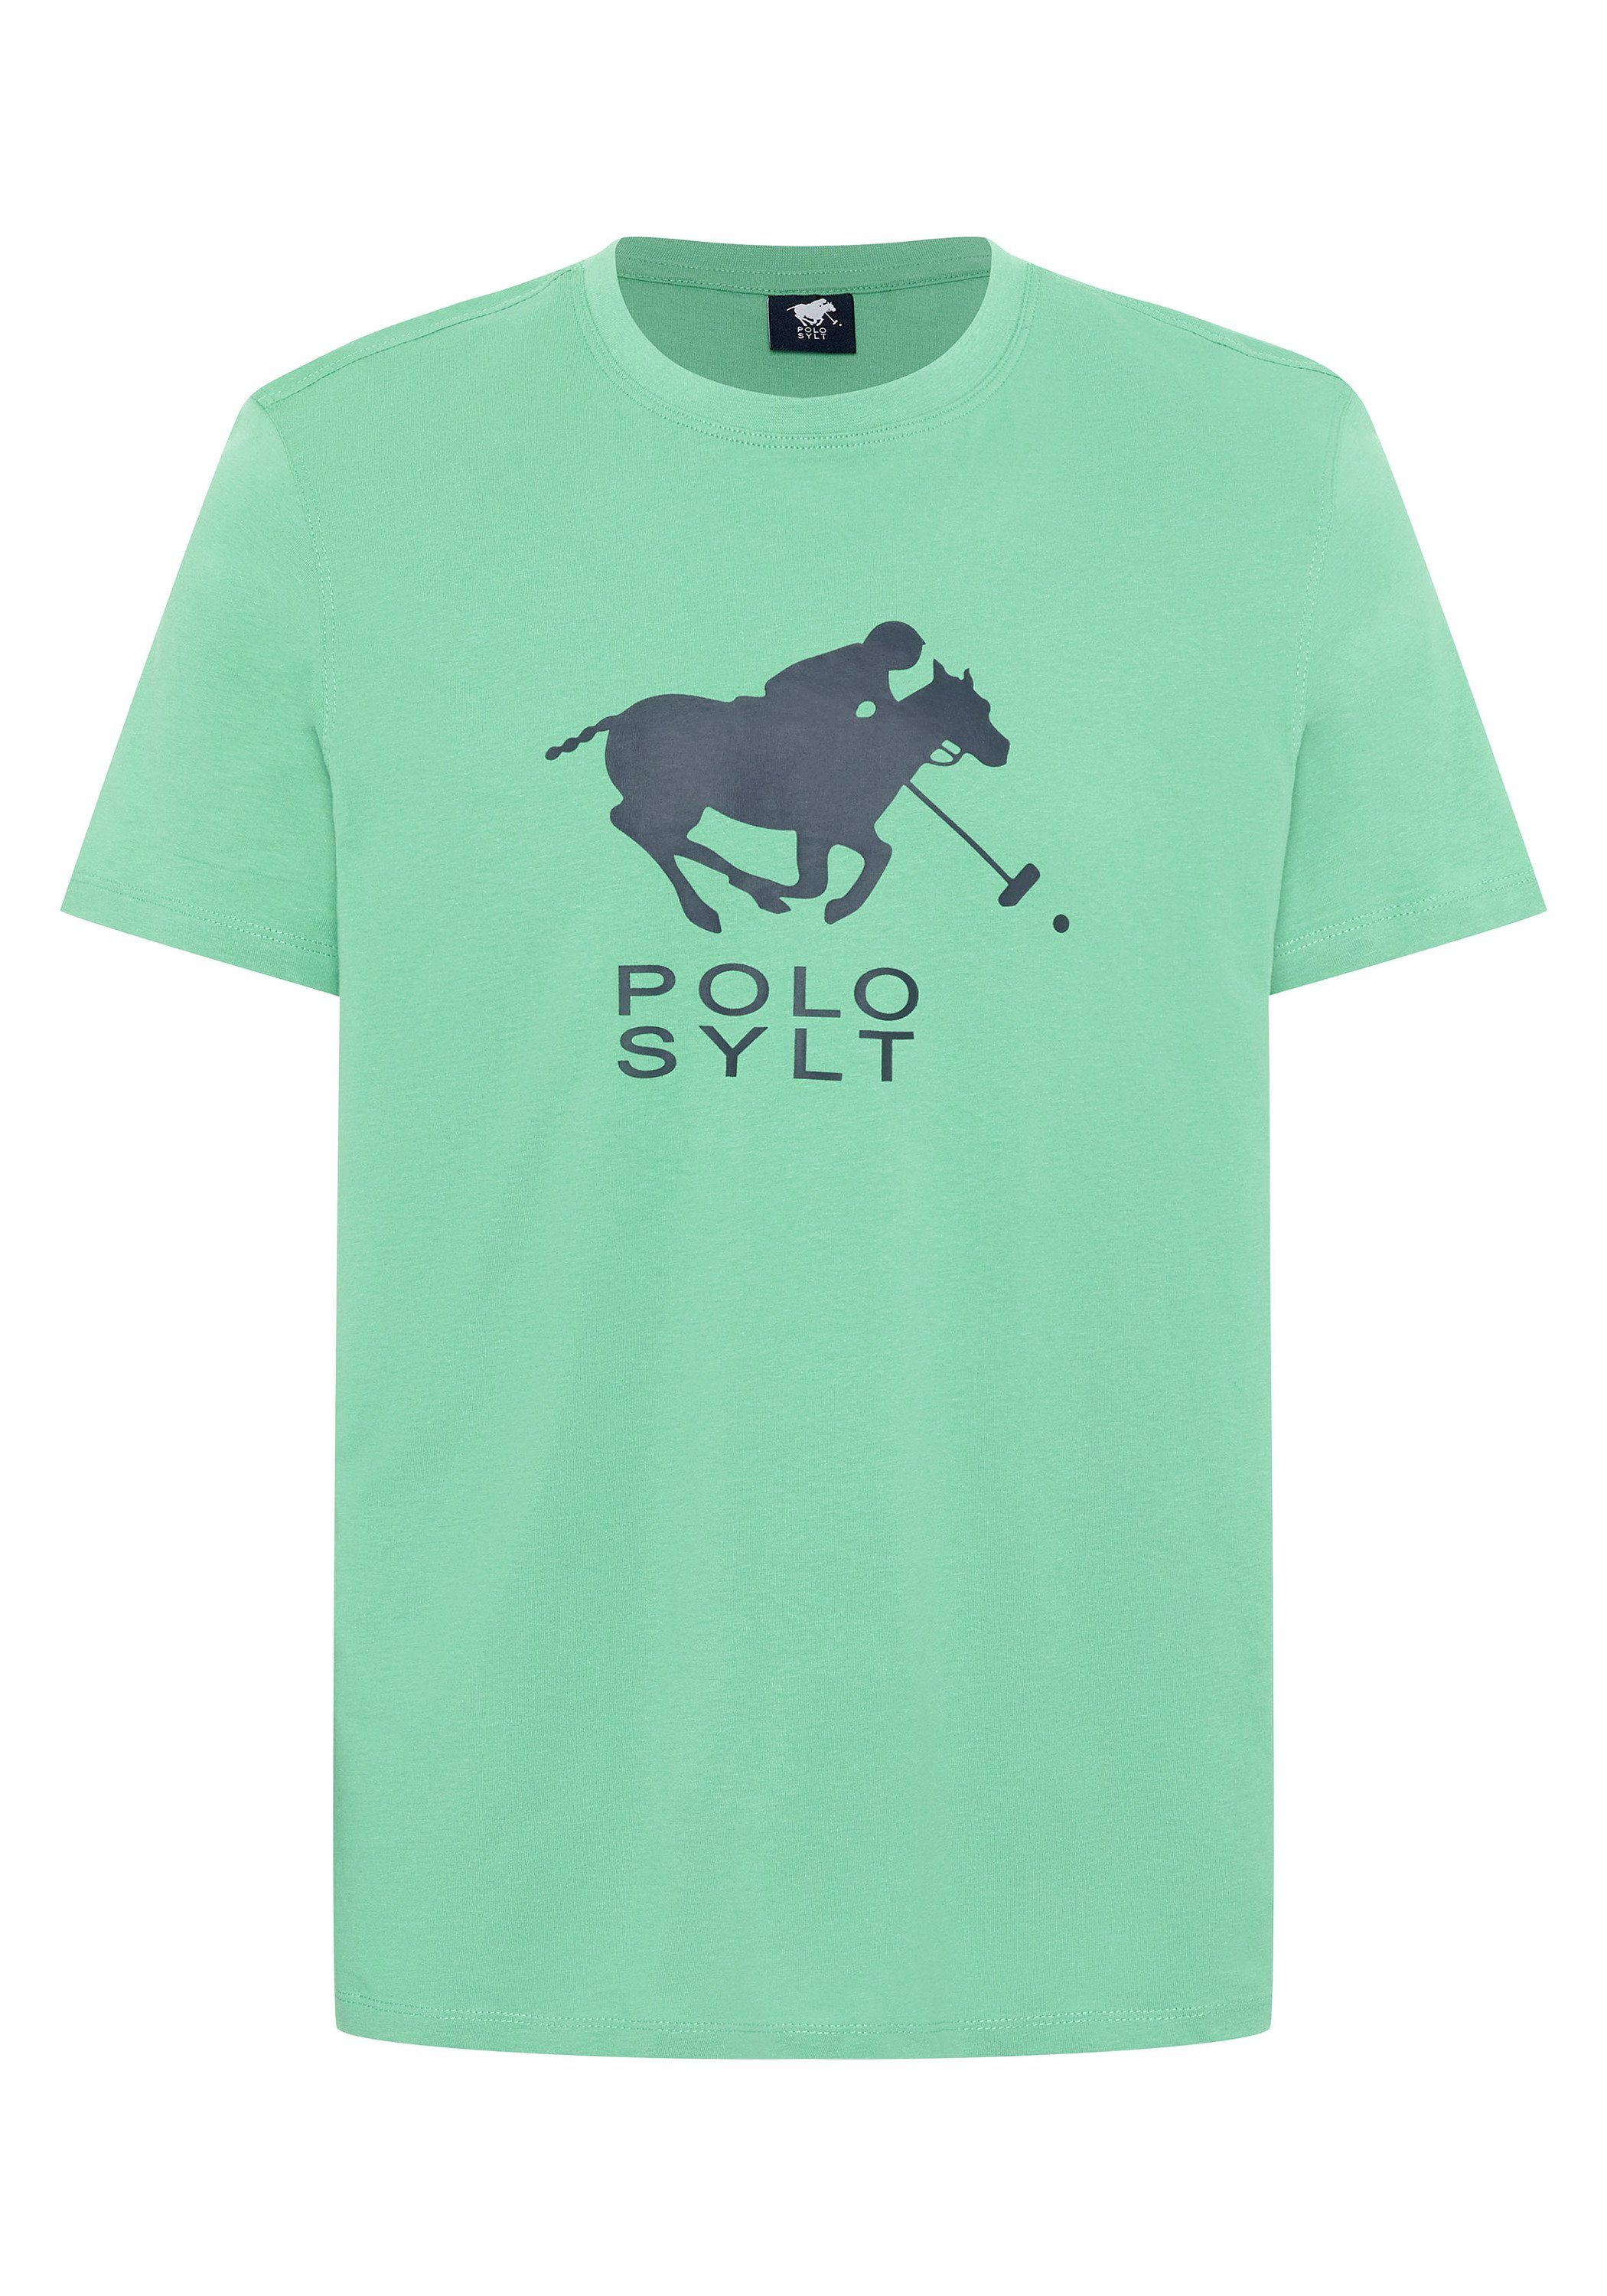 Polo Sylt Print-Shirt mit Neon Logo Frontprint 16-5721 Marine Green